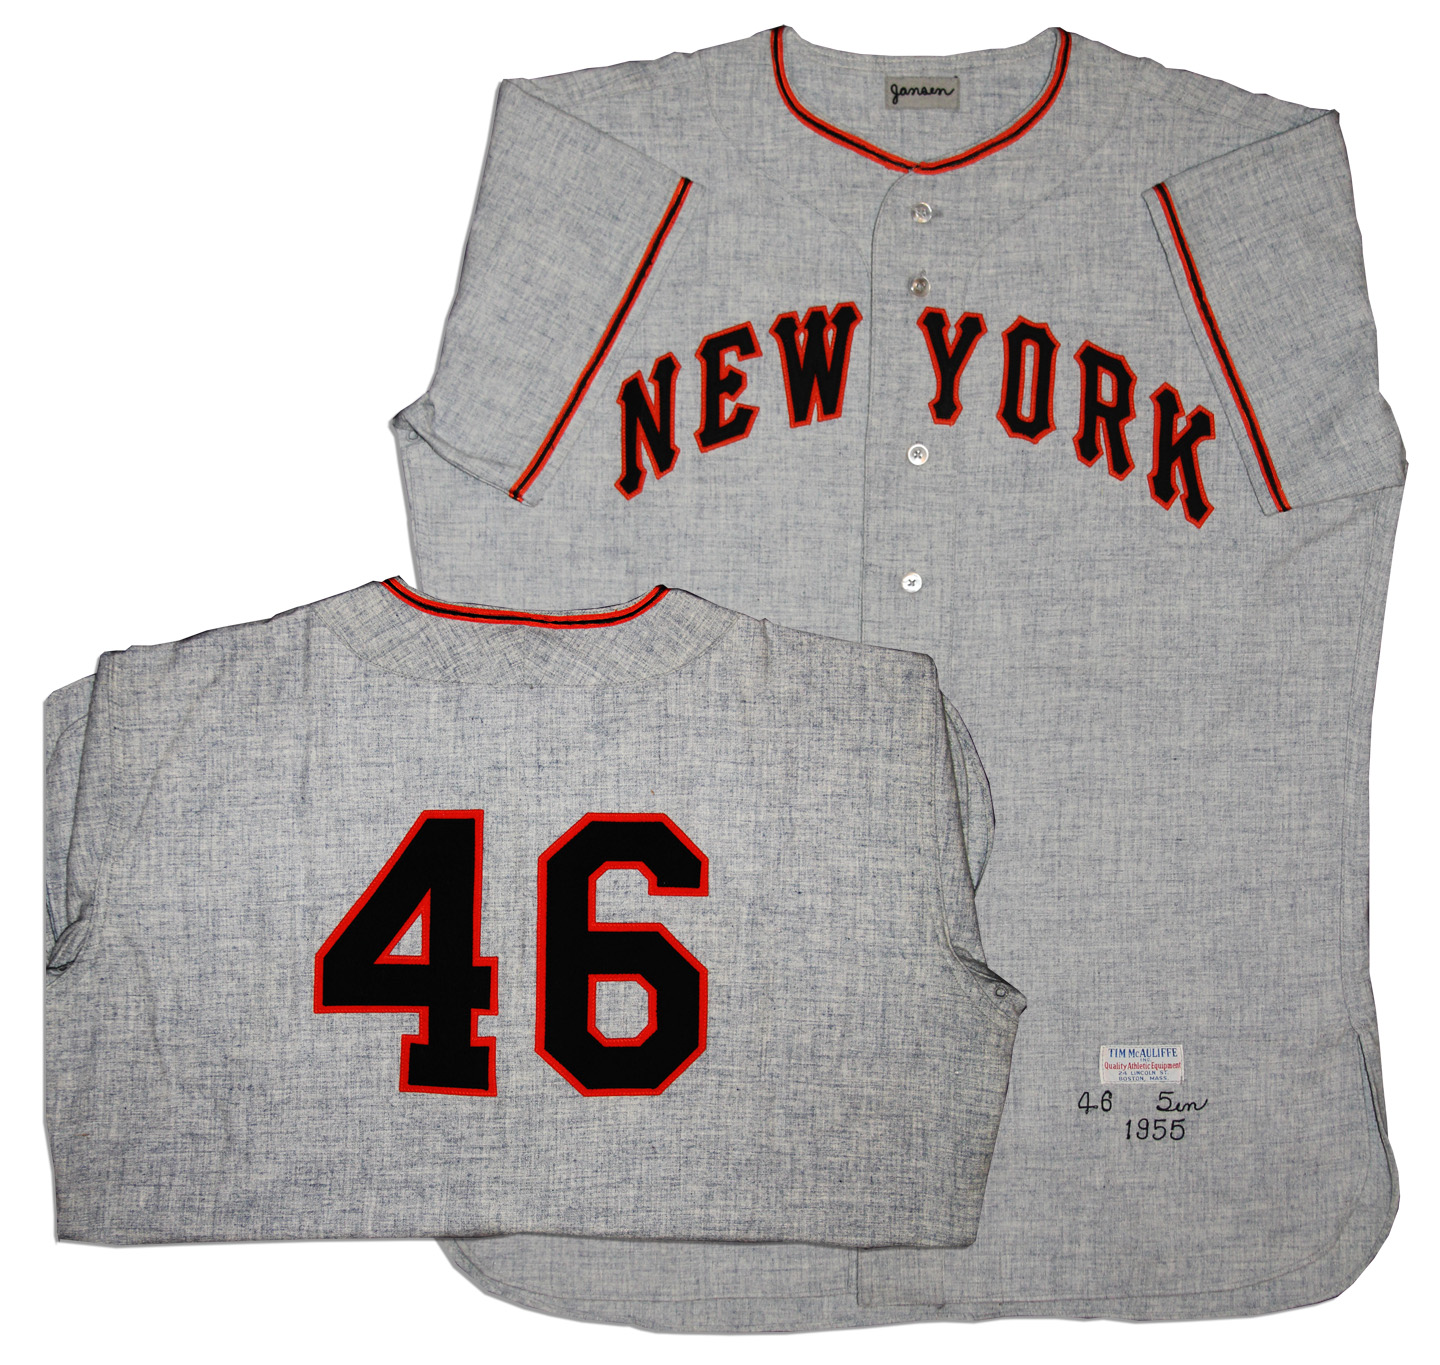 1955 New York Giants jersey